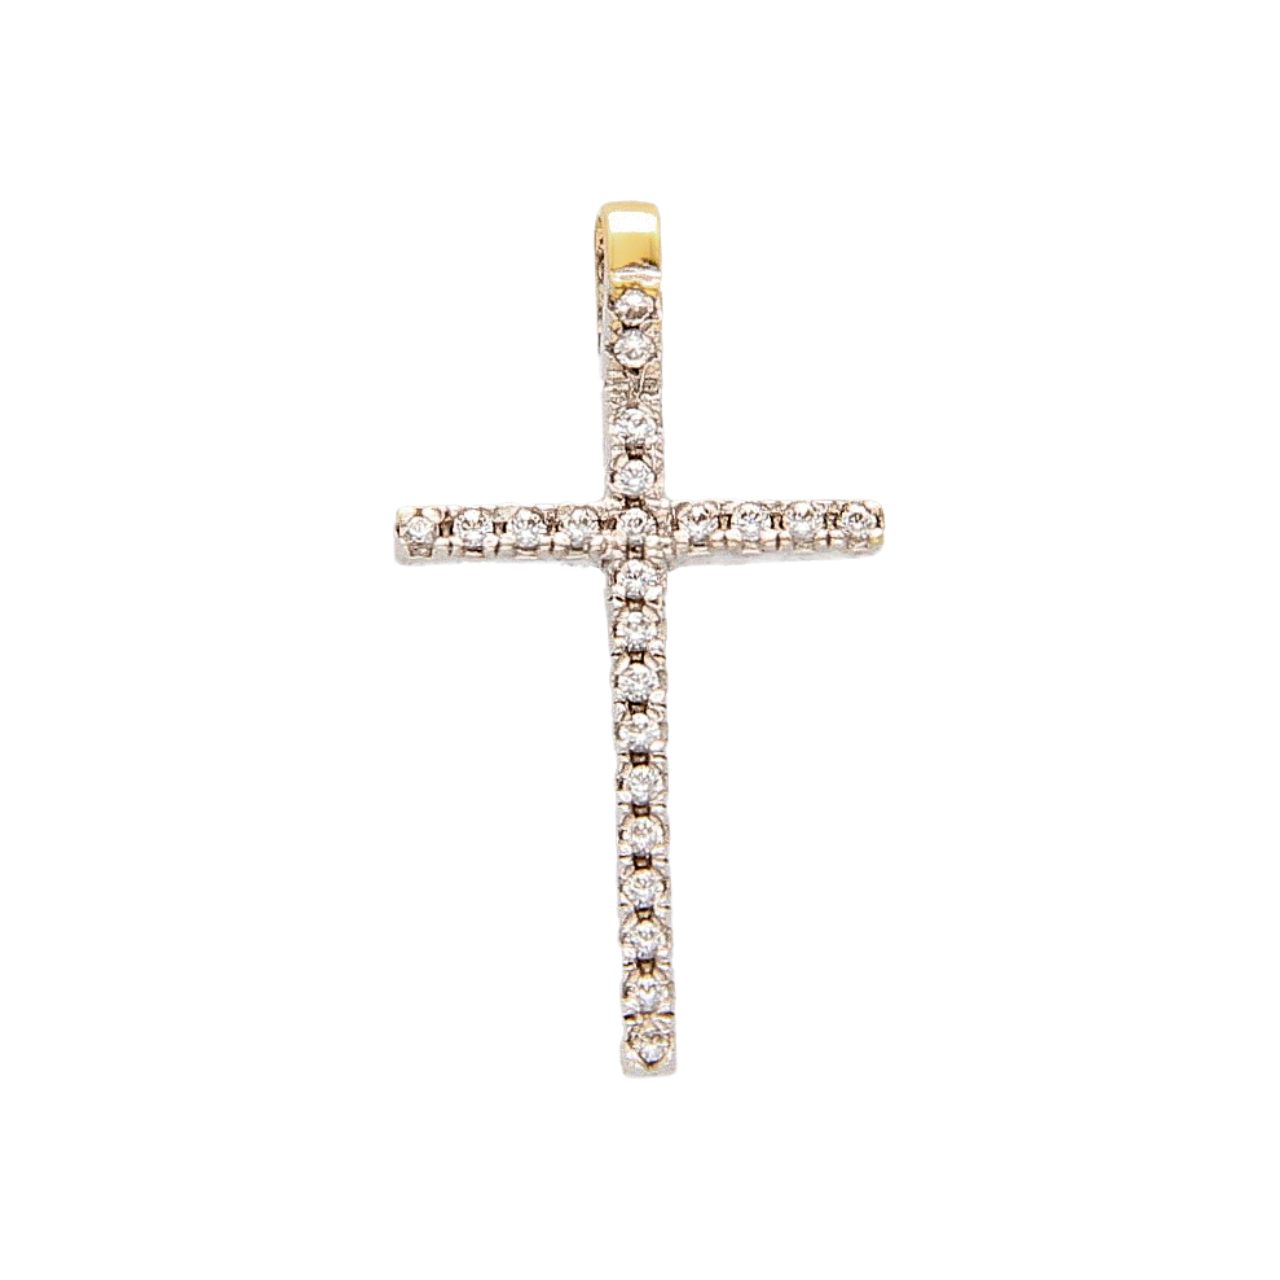 White gold cross pendant with zircons